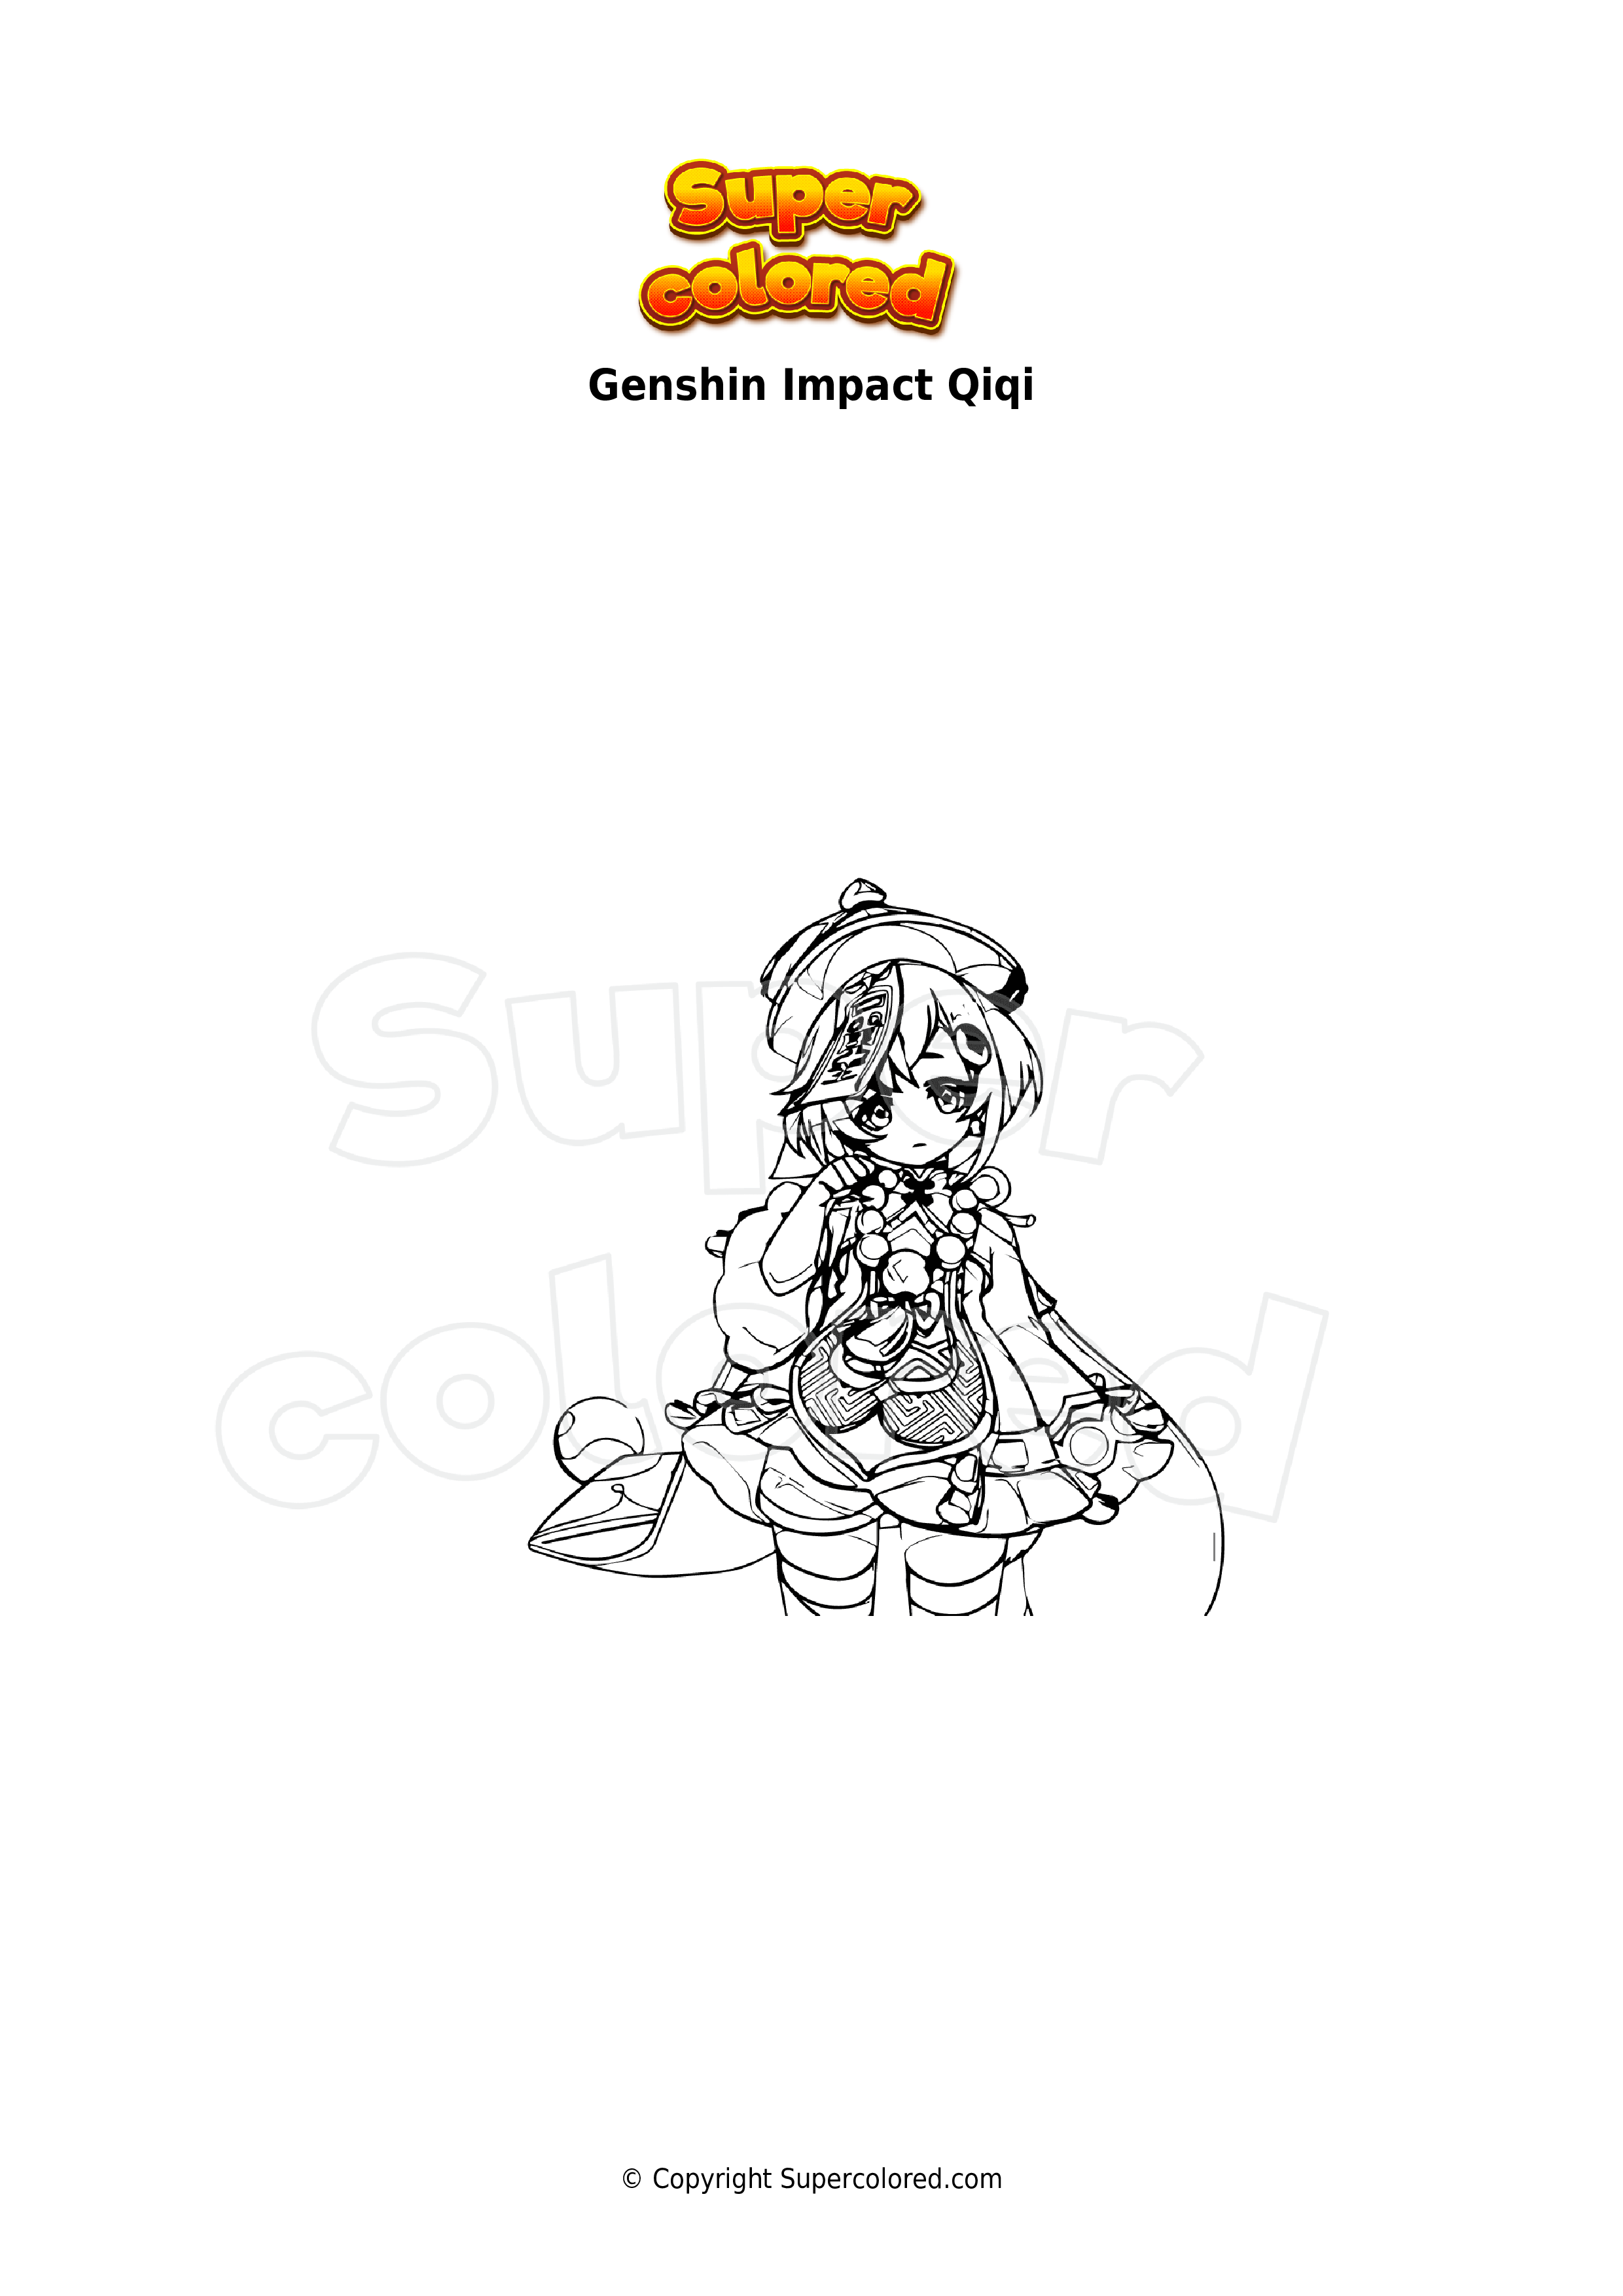 Coloring page Genshin Impact Ganyu - Supercolored.com